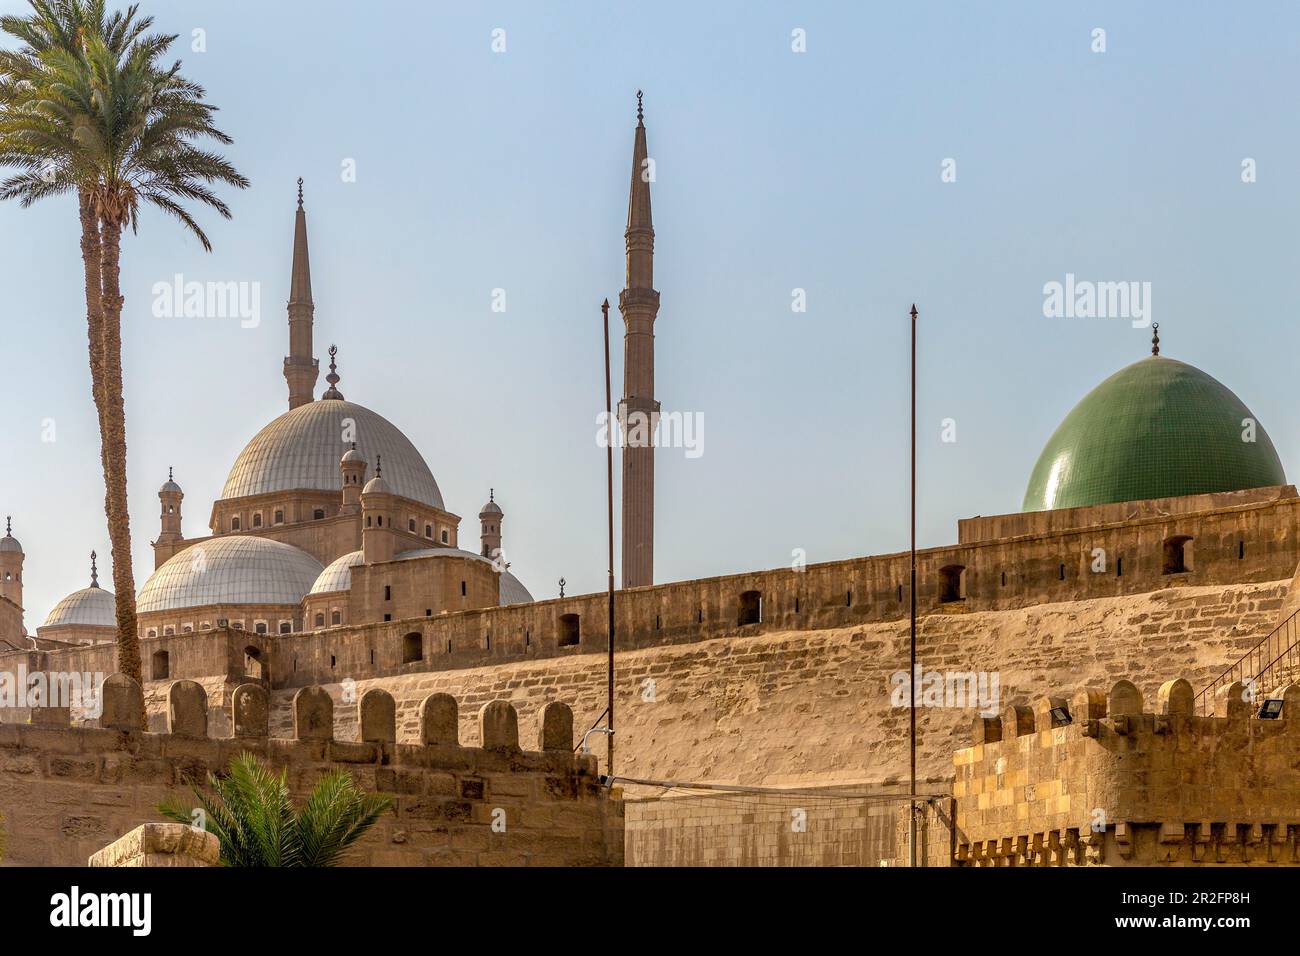 Great Mosque of Muhammad Ali Pasha, and green dome of Al-Nasir Muhammad ibn Qalawun Mosque, the Citadel, Cairo Stock Photo